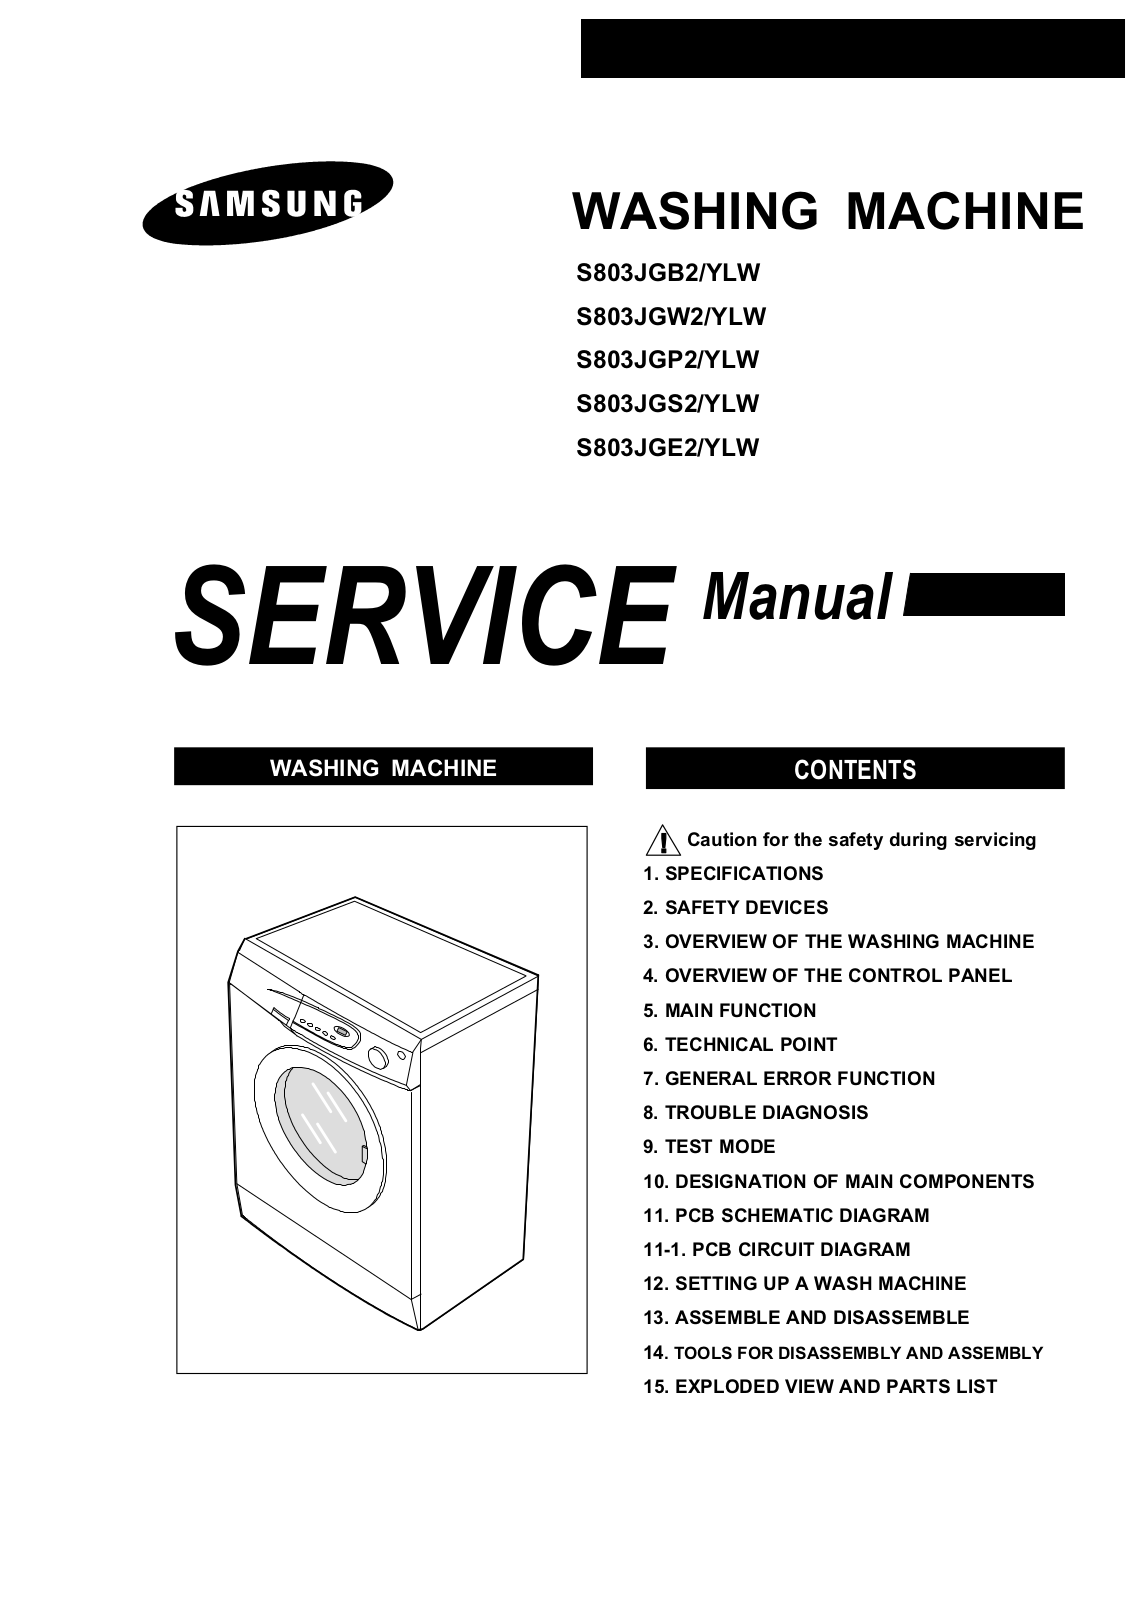 Samsung S803JGB2, S803JGW2, S803JGP2, S803JGS2, S803JGE2 Service manual